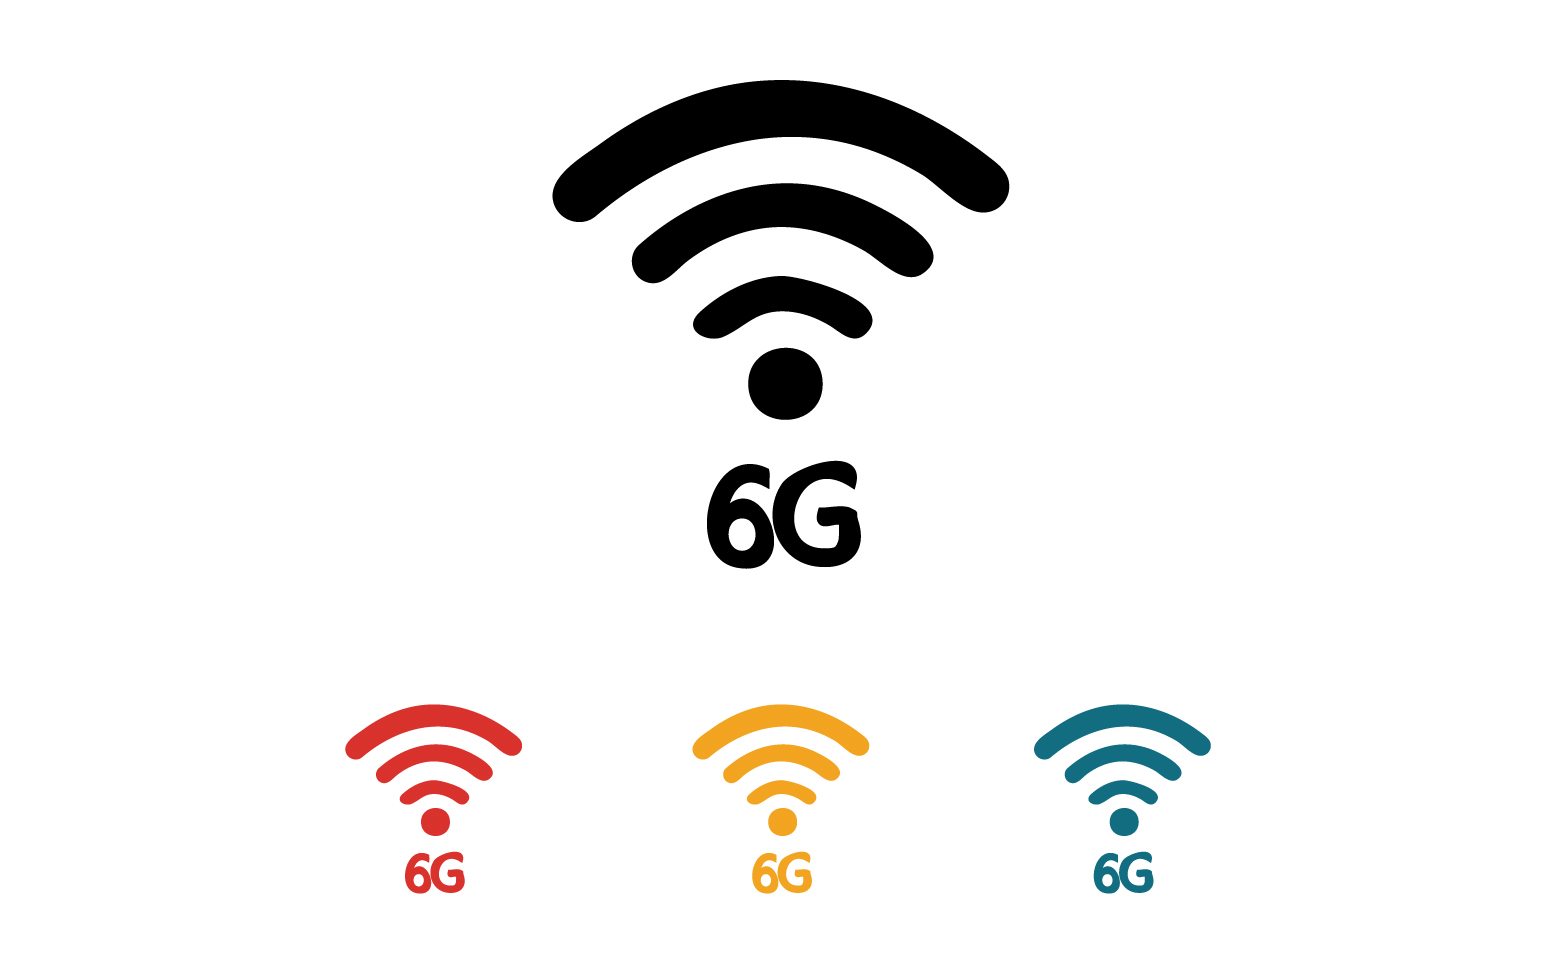 6G signal network tecknology logo vector icon v15